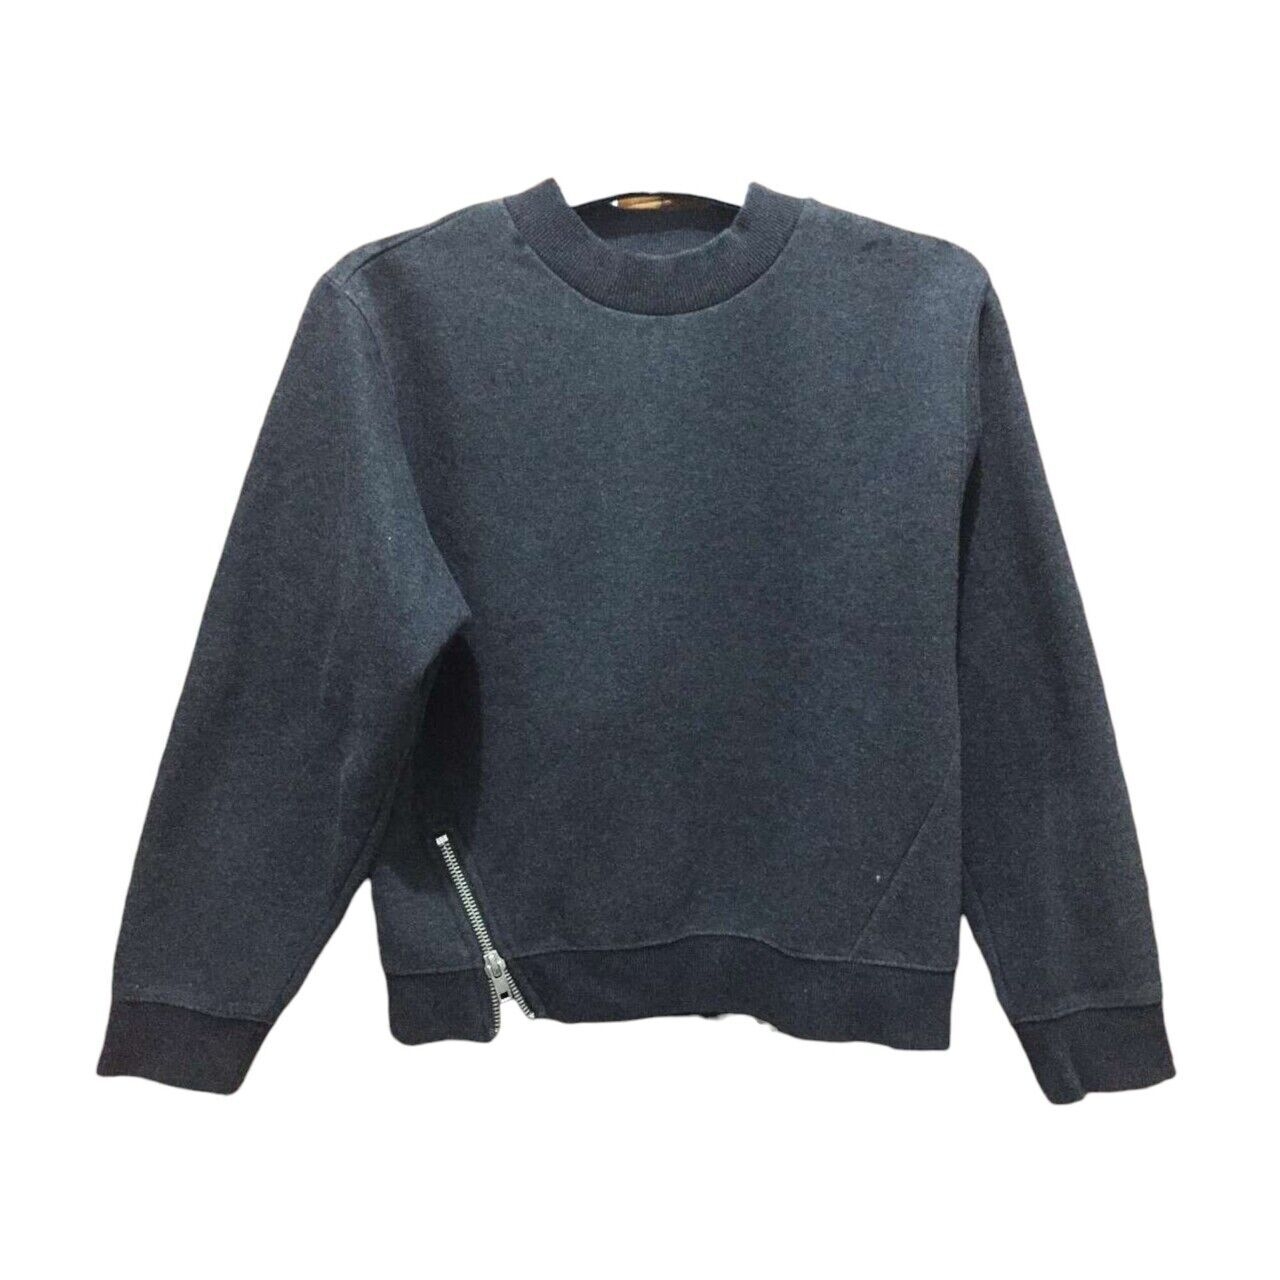 Giordano Black Sweater